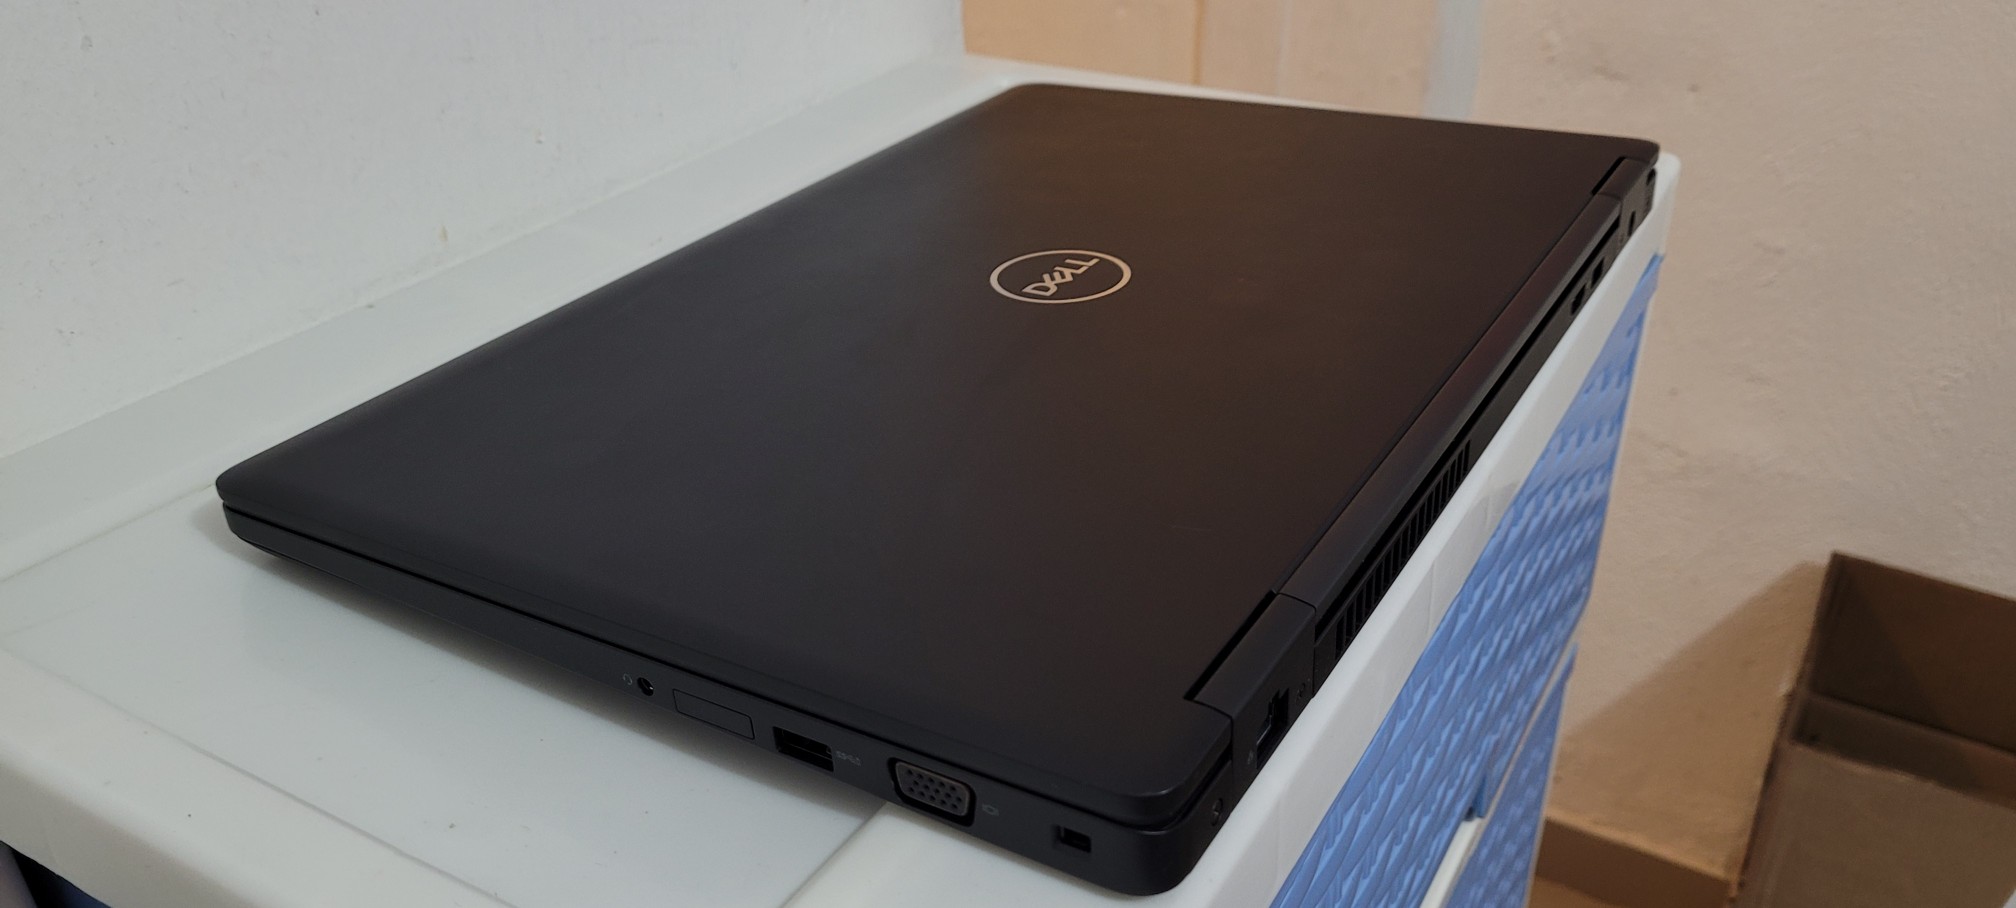 computadoras y laptops - laptop Dell 5590 Core i5 8va Gen Ram 16gb ddr4 Disco 512gb Video 8gb 2